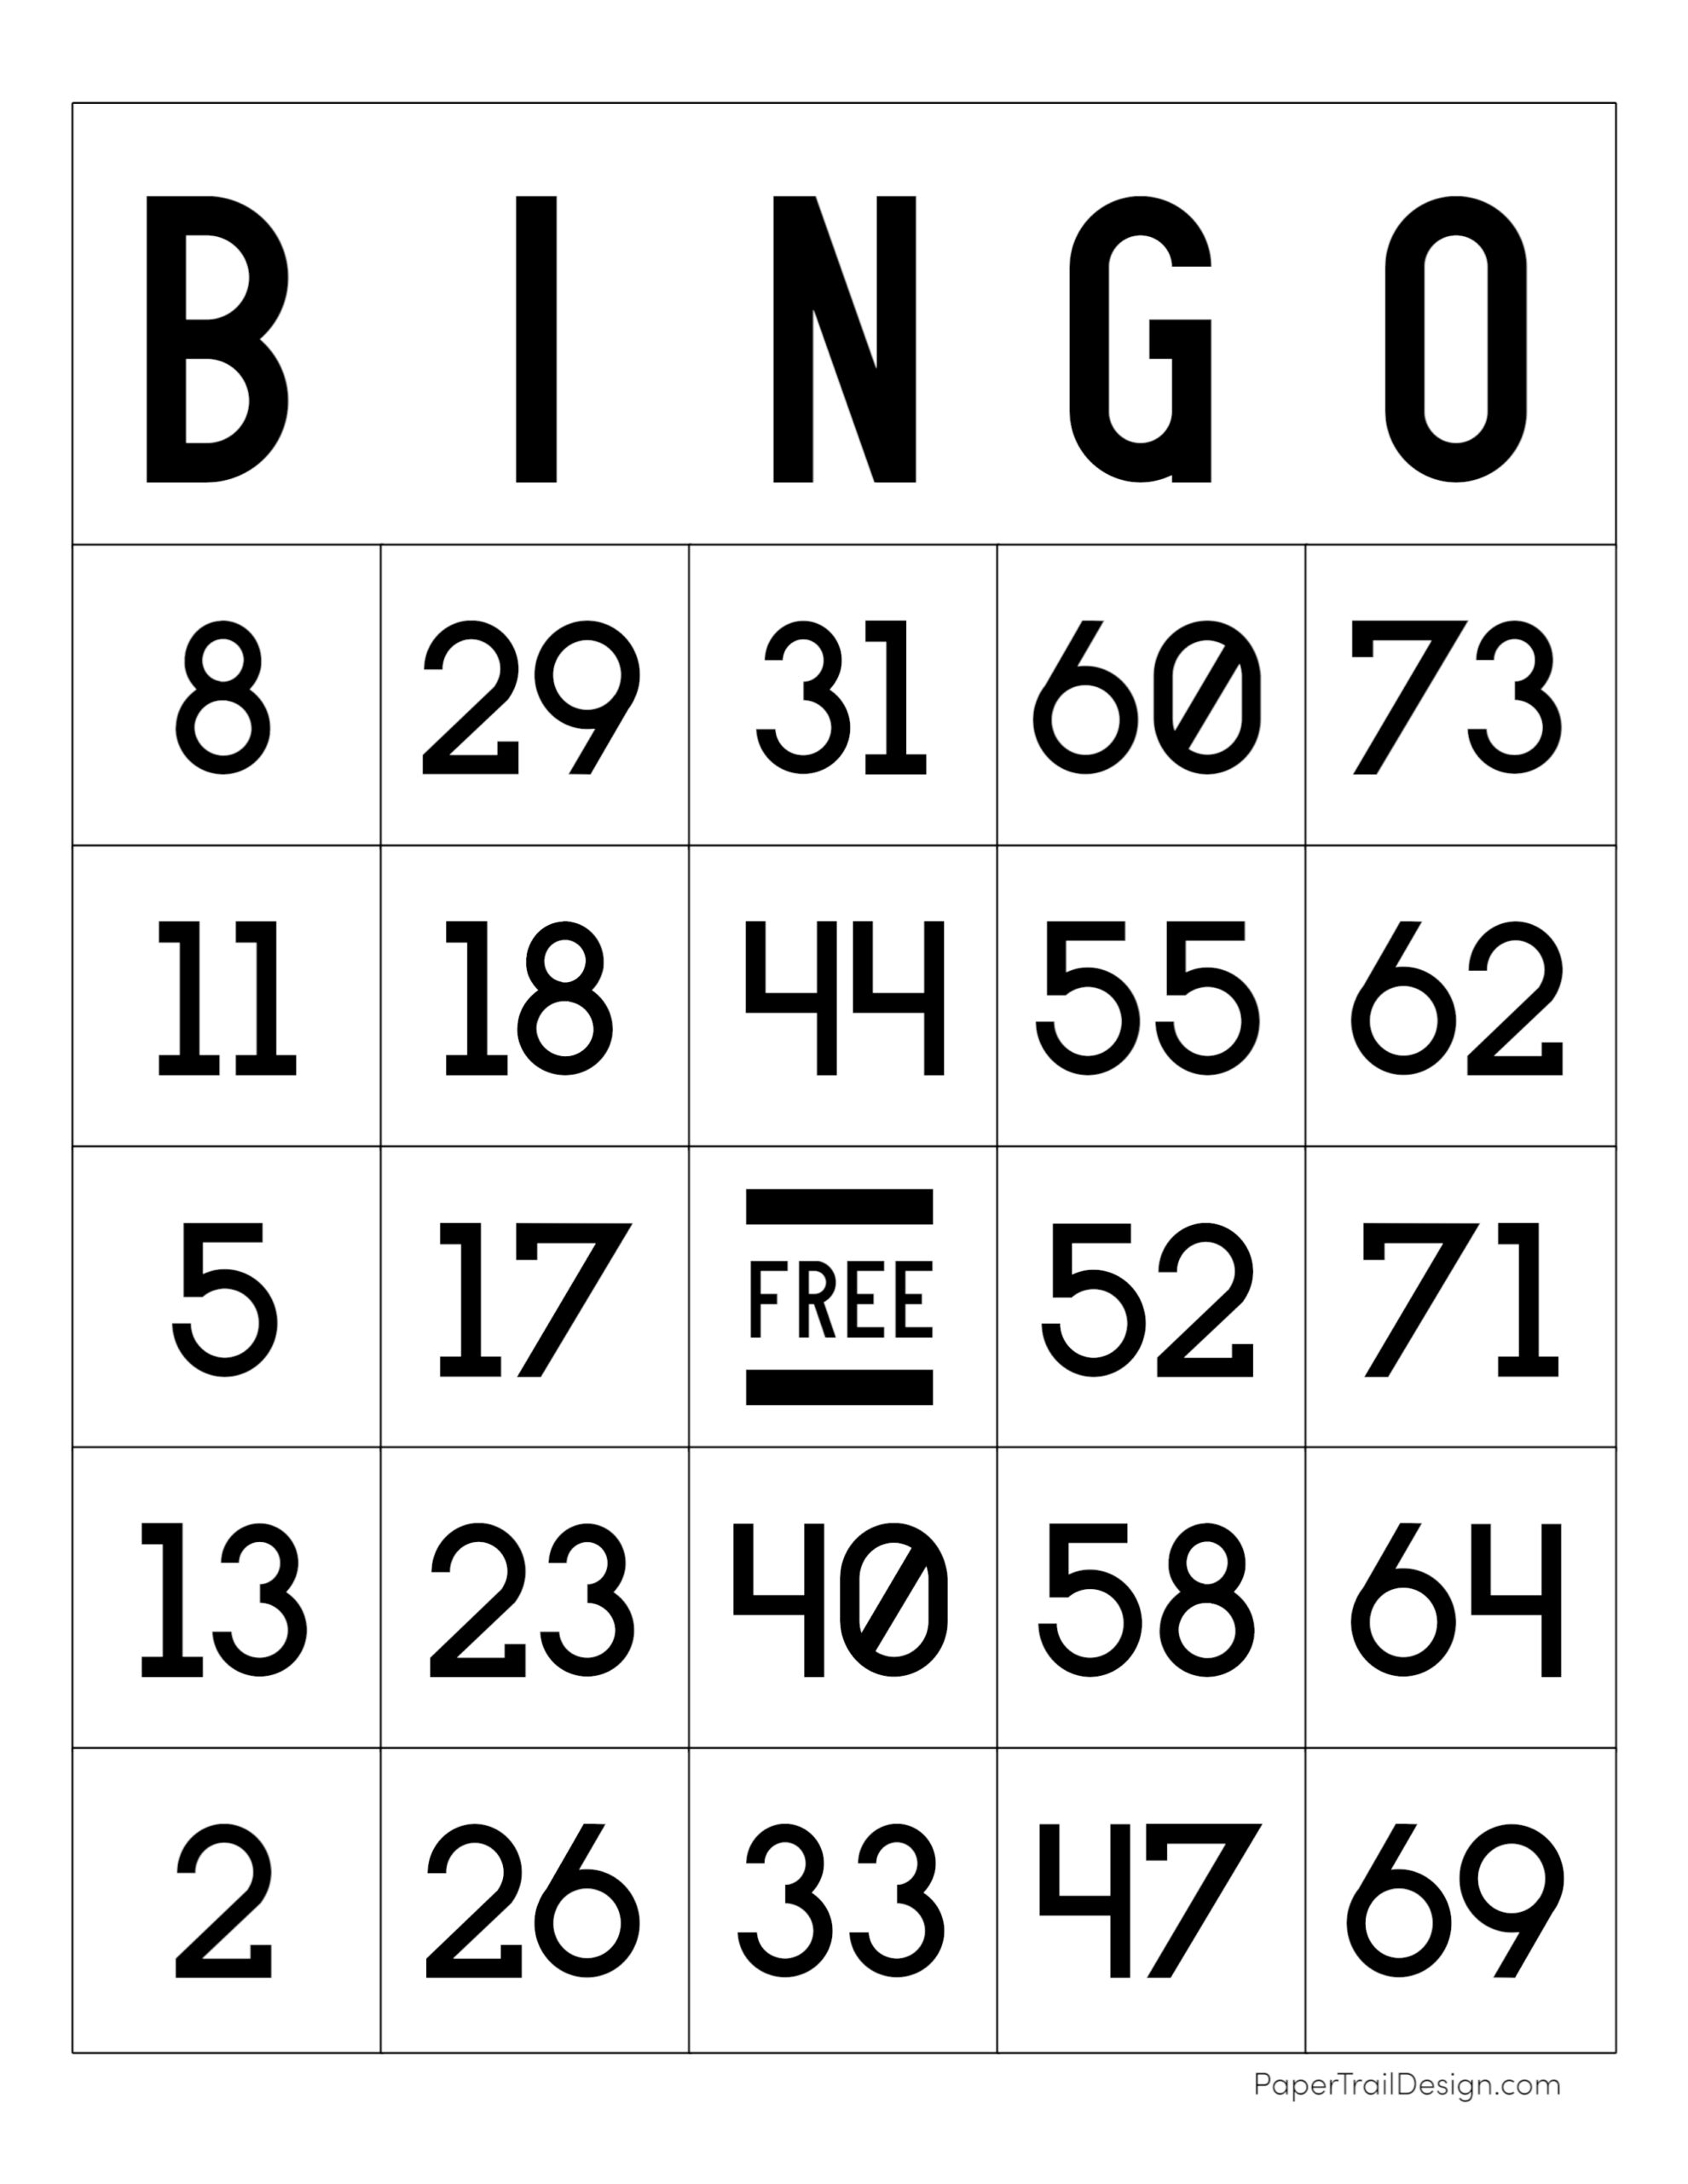 Bingo cards printable blank - estgsa